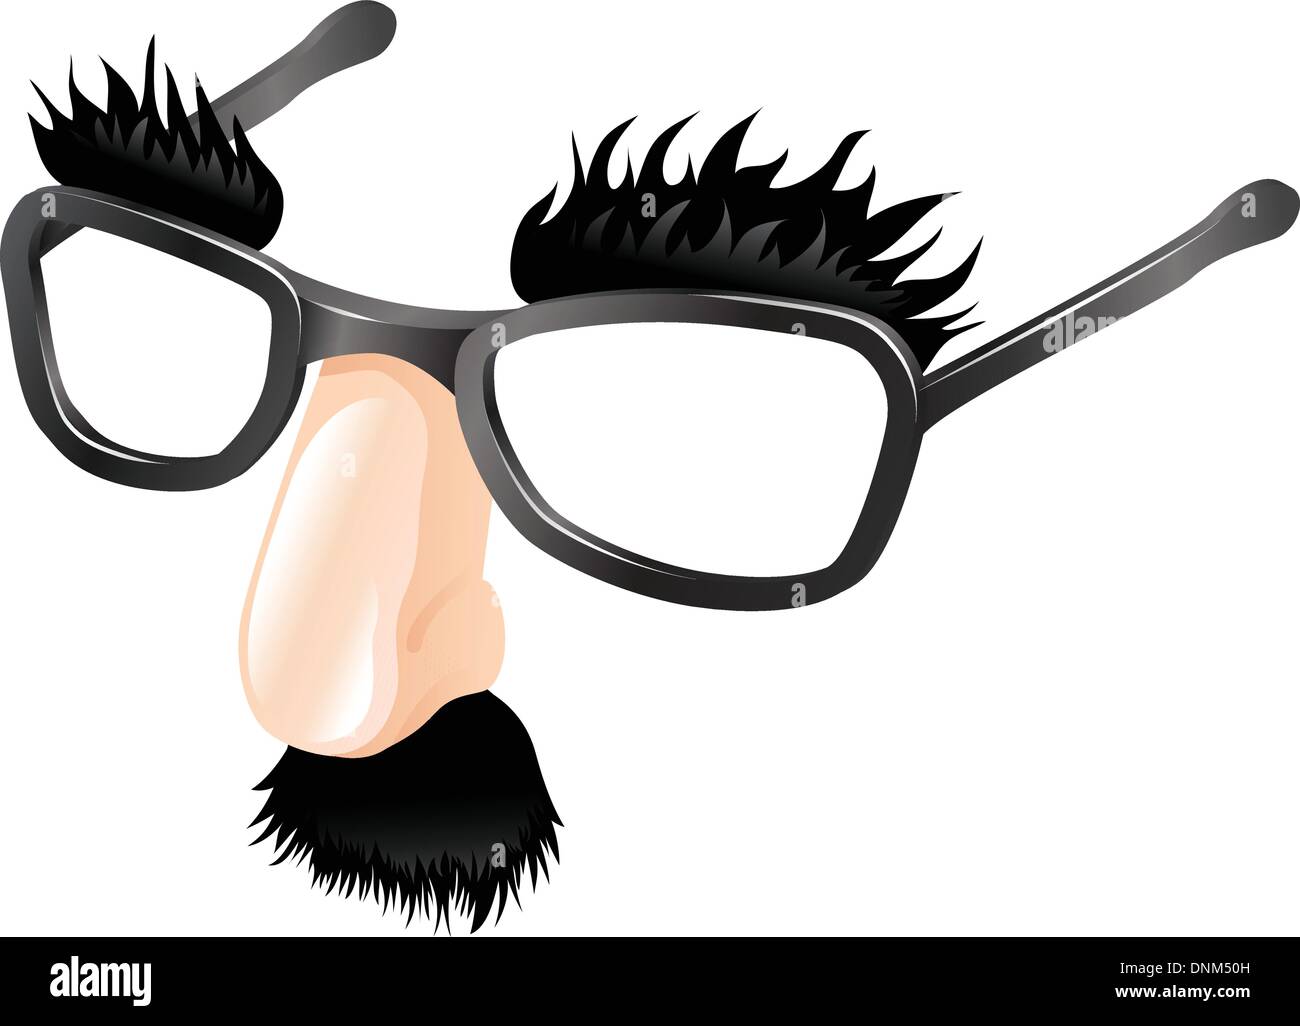 Comedy fake nose mustache, eyebrows, glasses icon 14617913 Vector